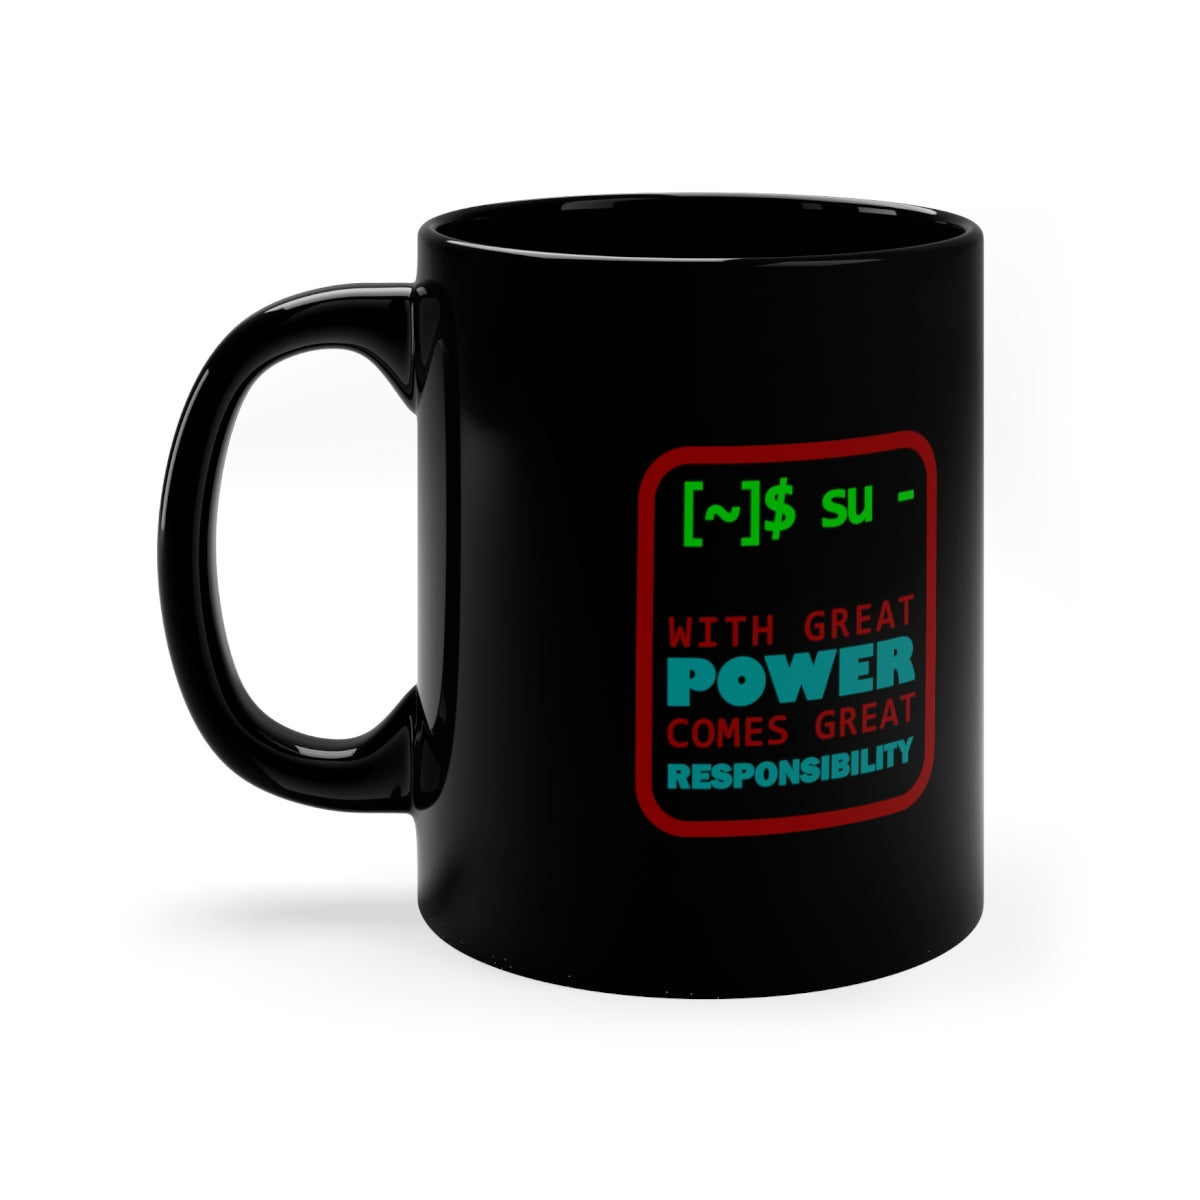 Great Power - Black Coffee Mug, 11oz